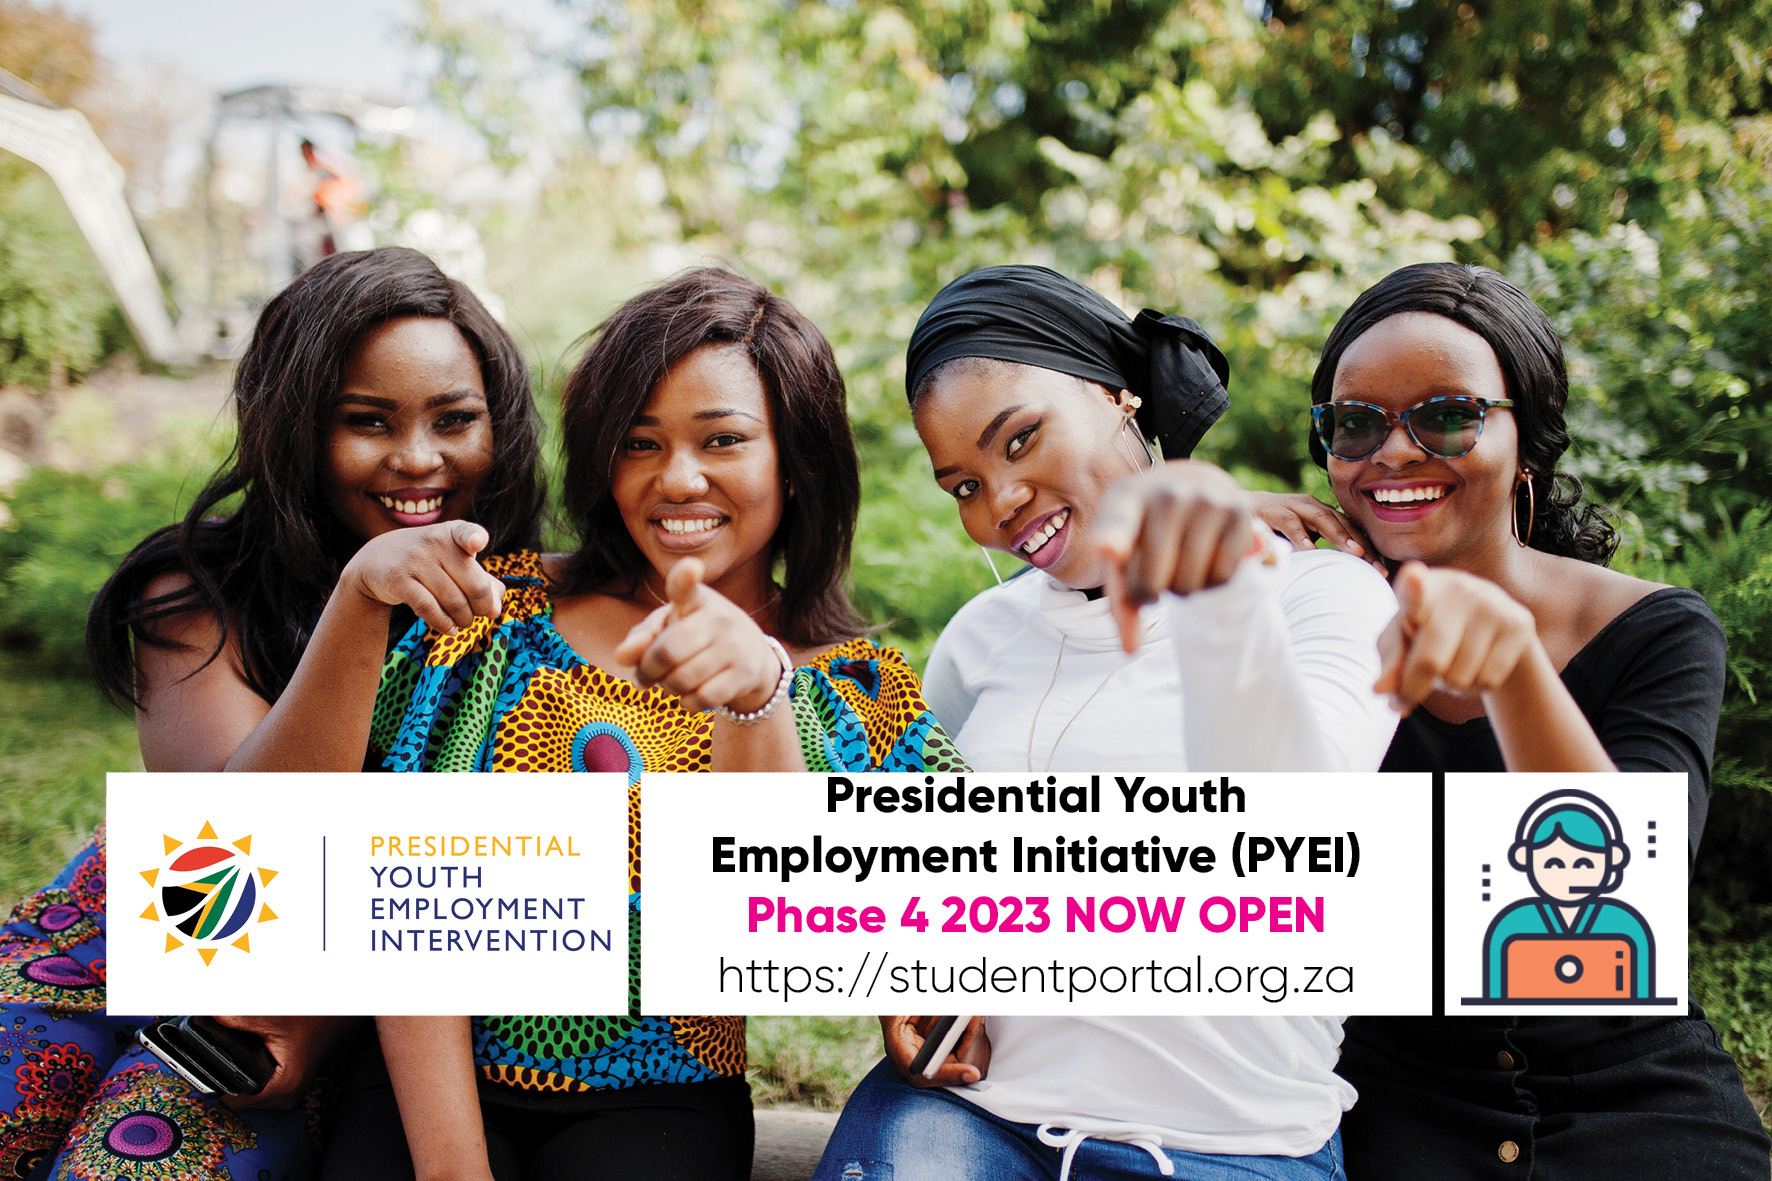 Presidential Youth Employment Initiative (PYEI) Phase 4 2023